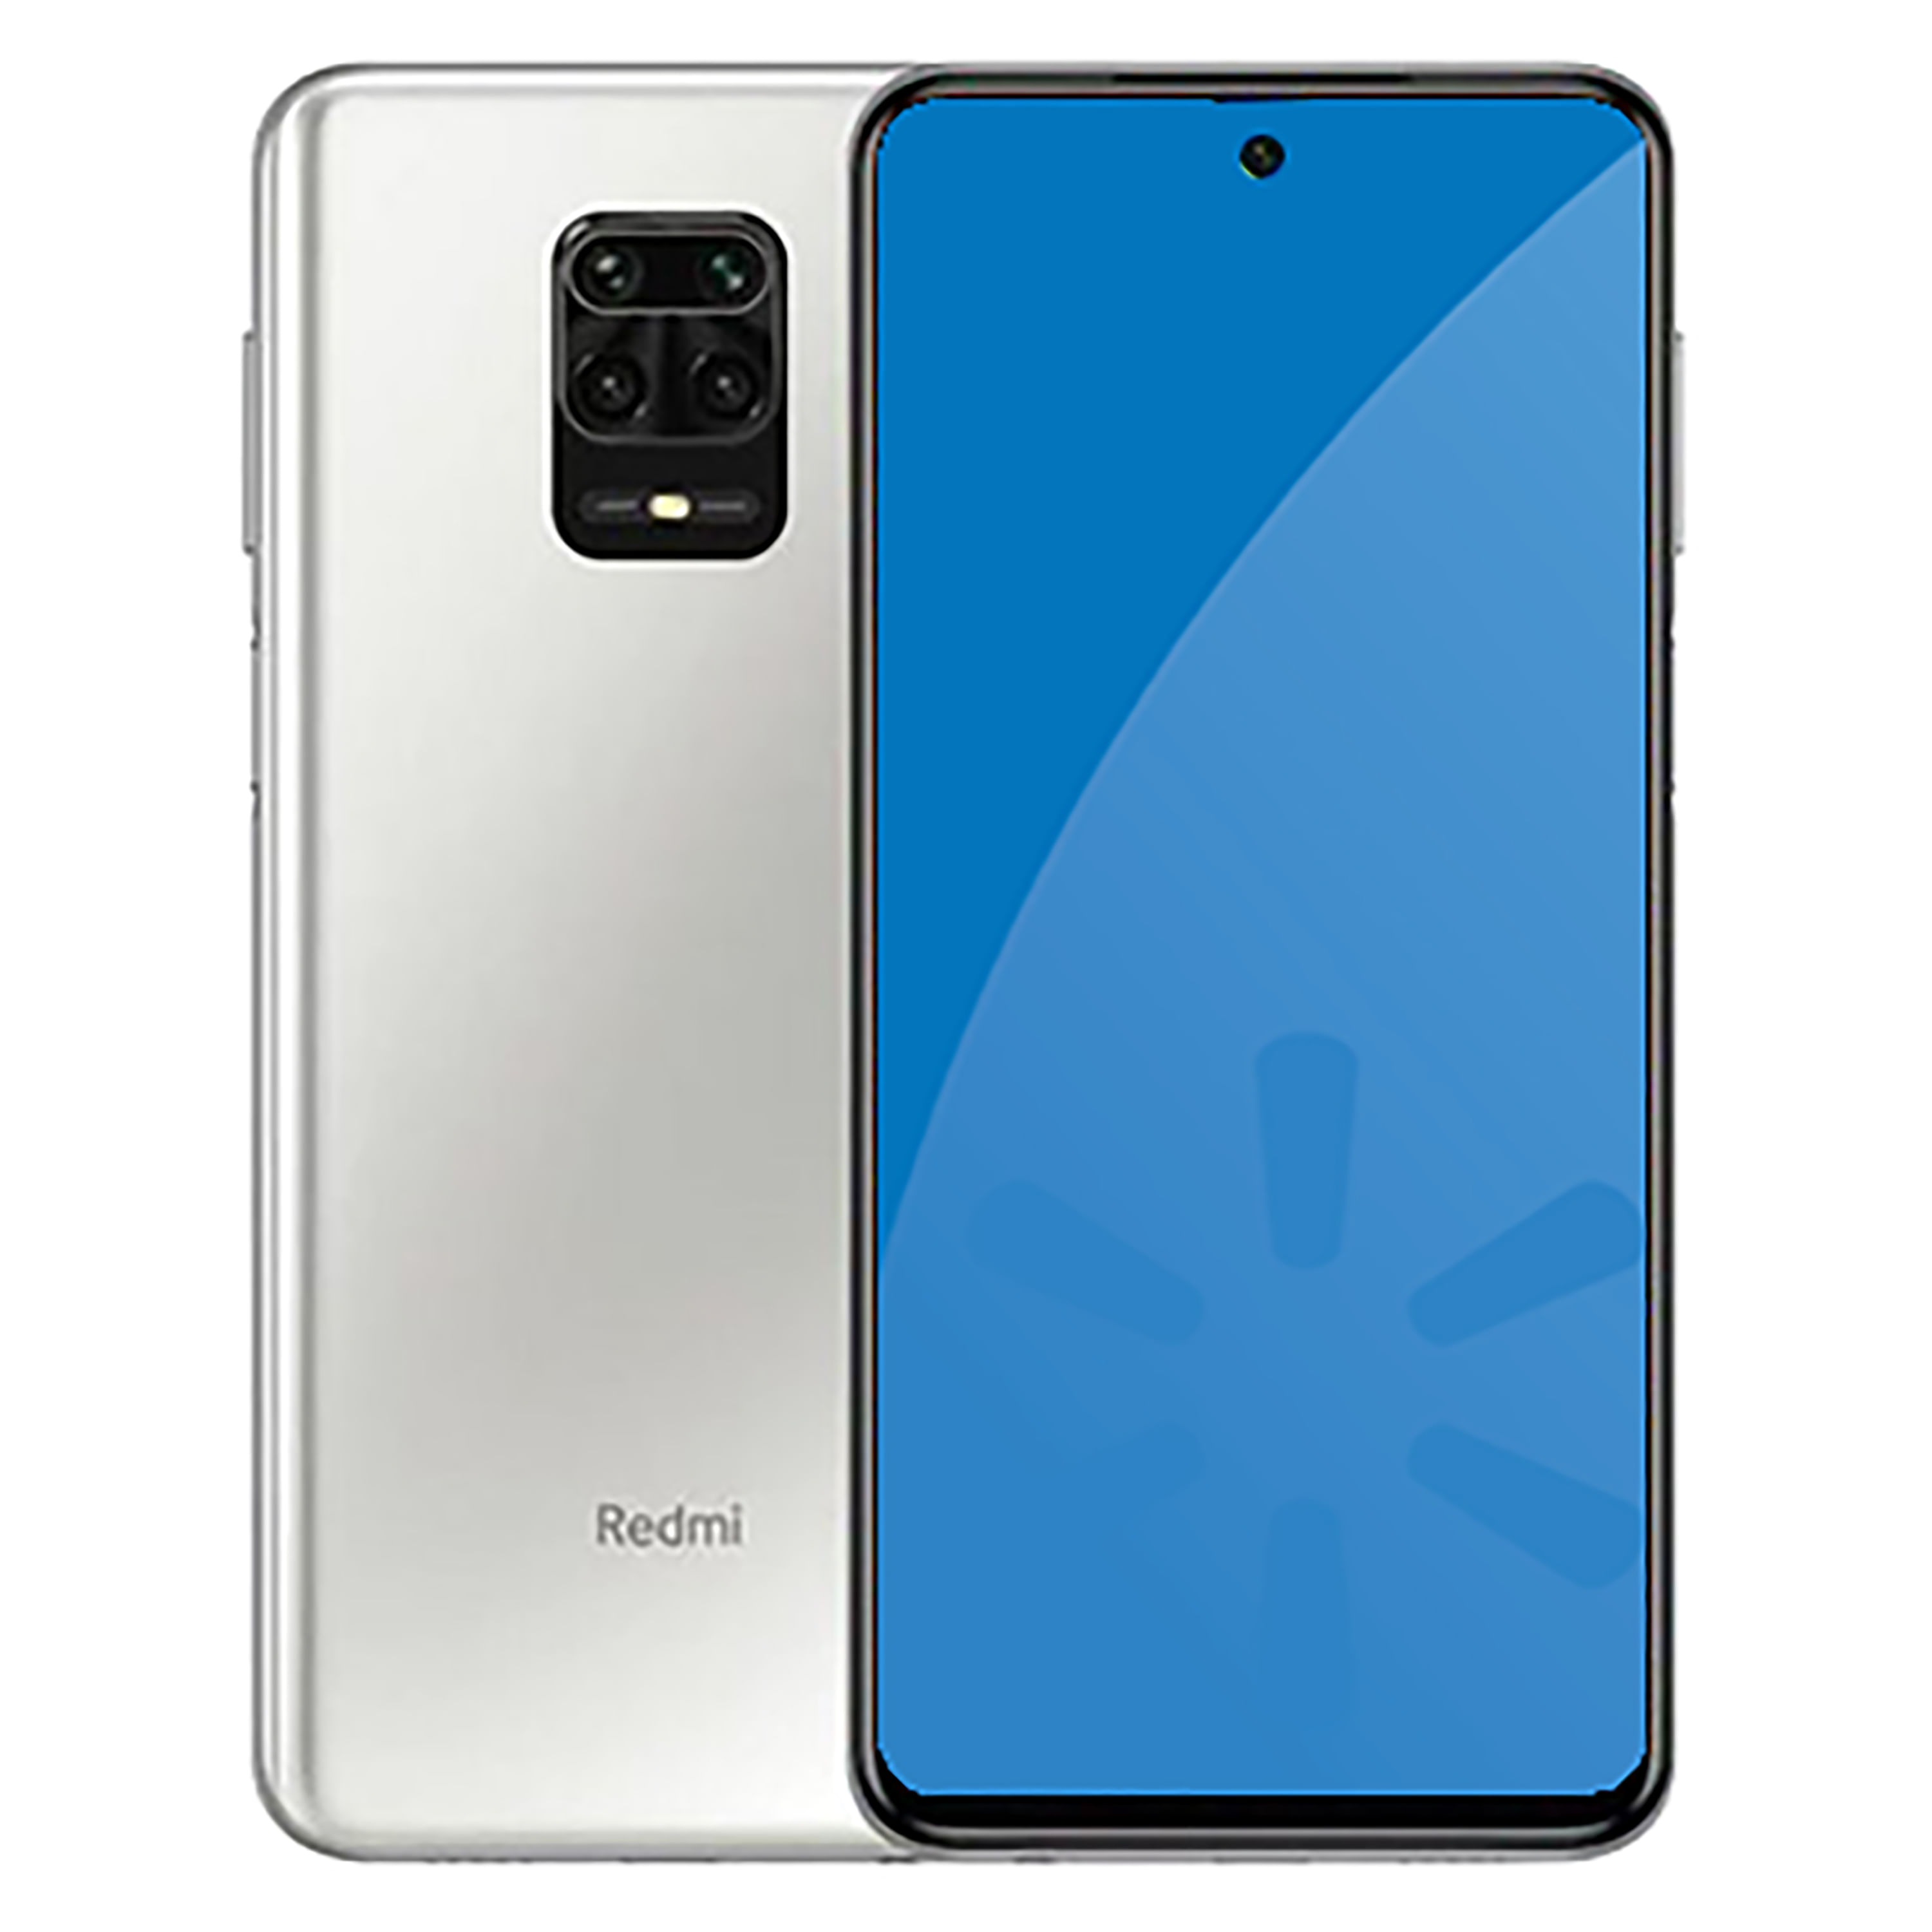 Teléfono Celular Redmi Note 9 Pro Dual Sim 64GB